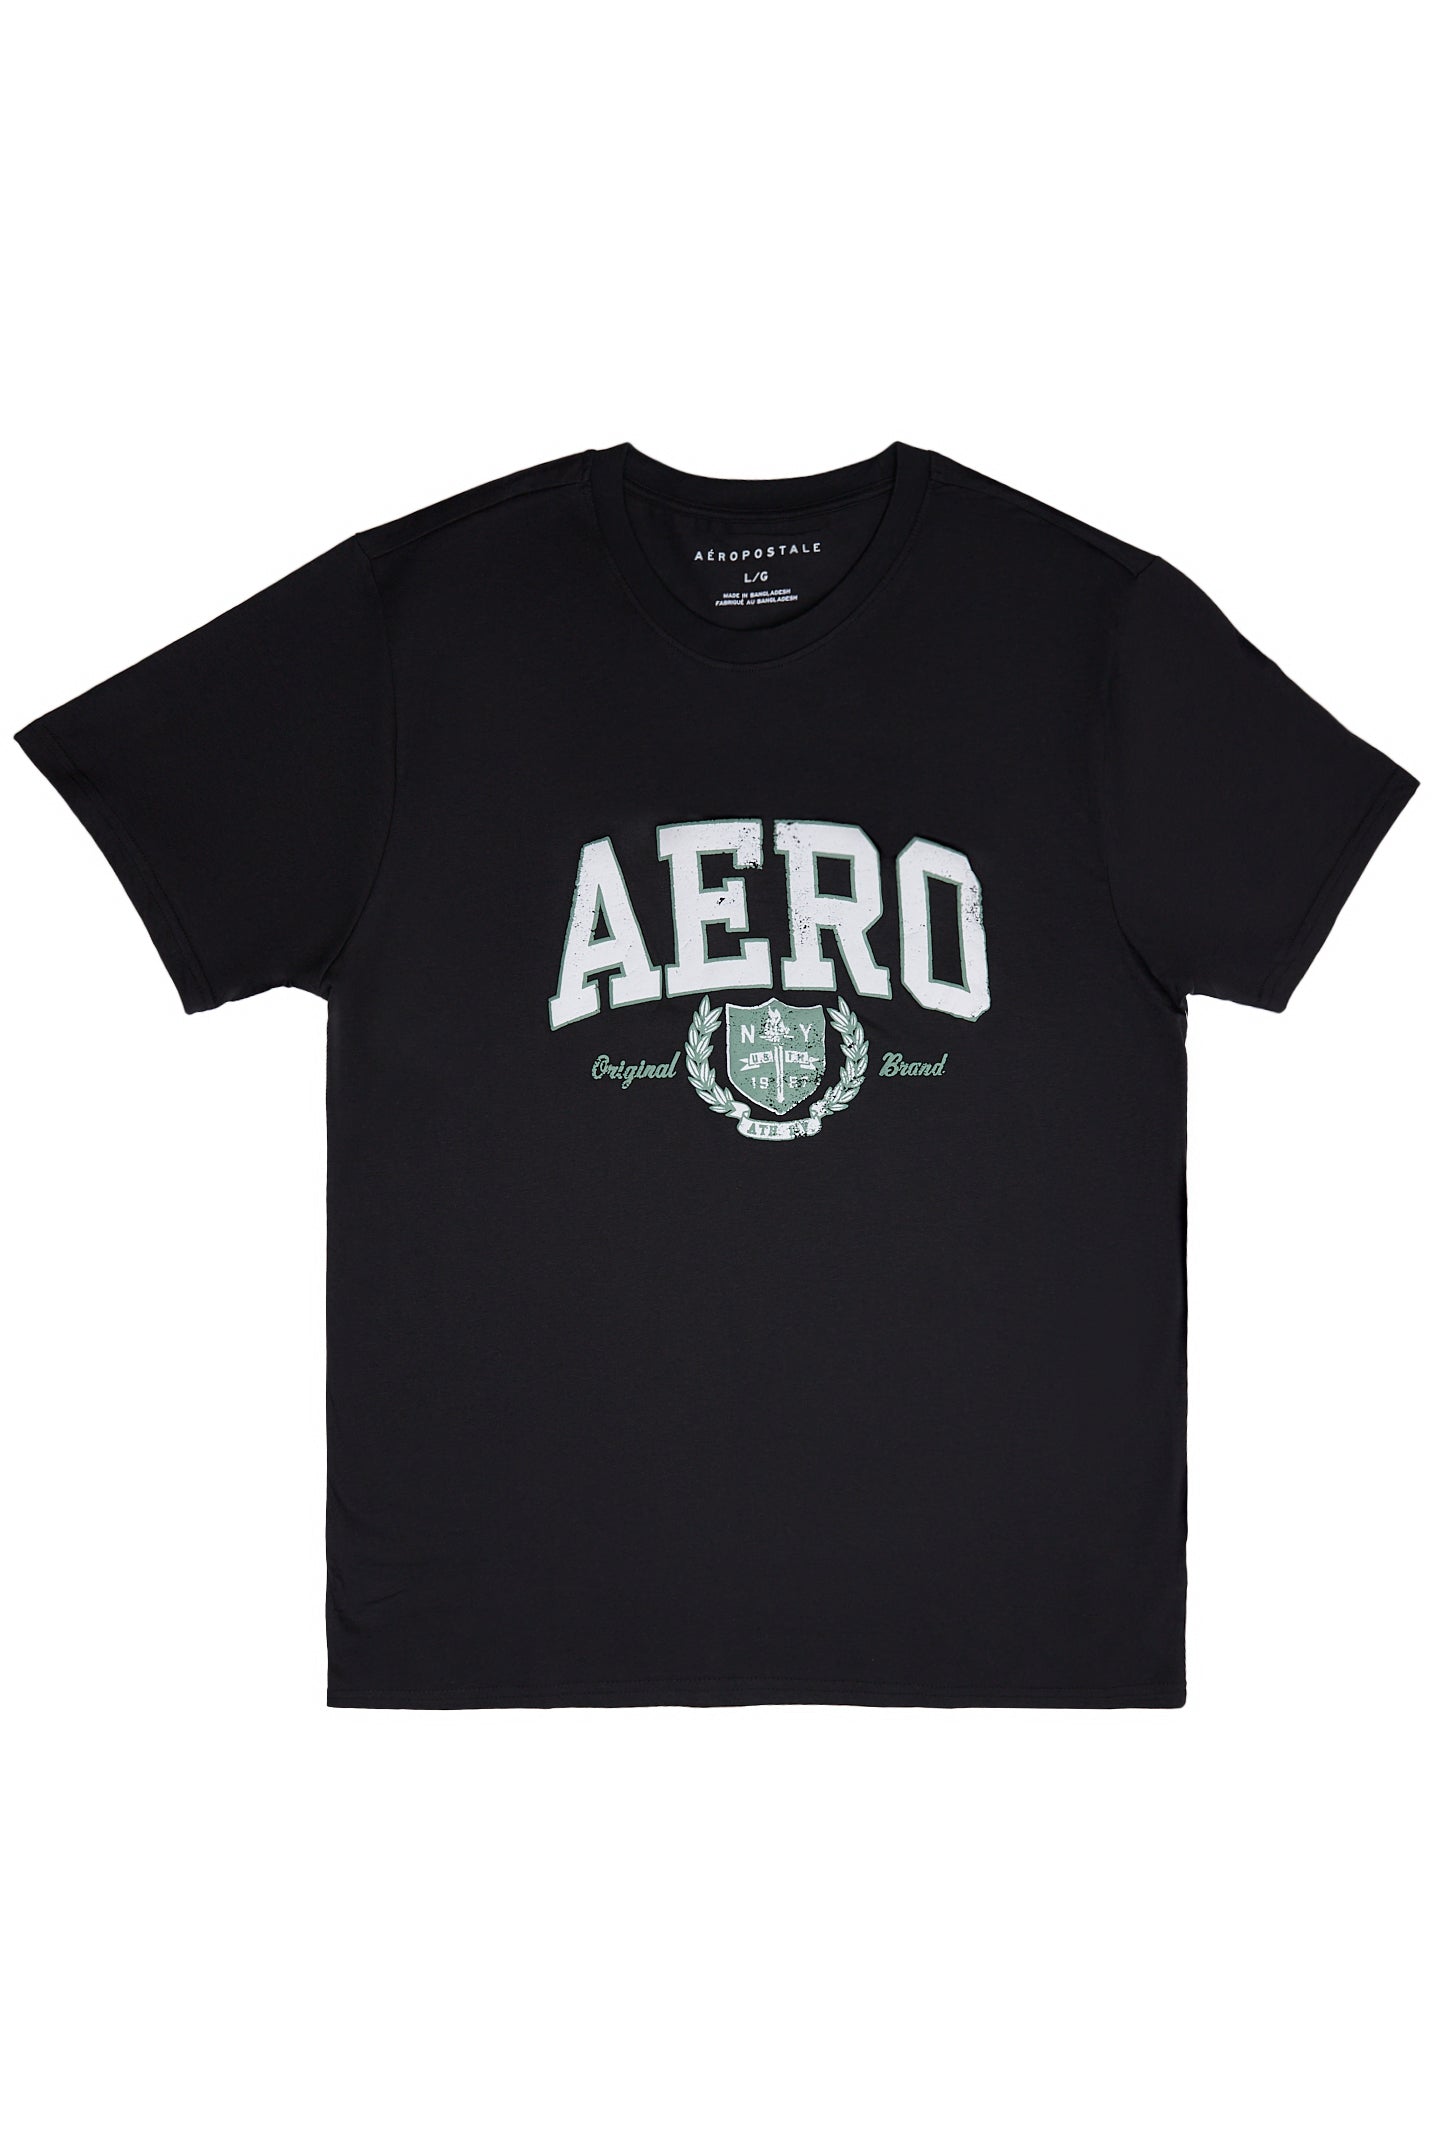 AERO Original Brand Graphic Tee